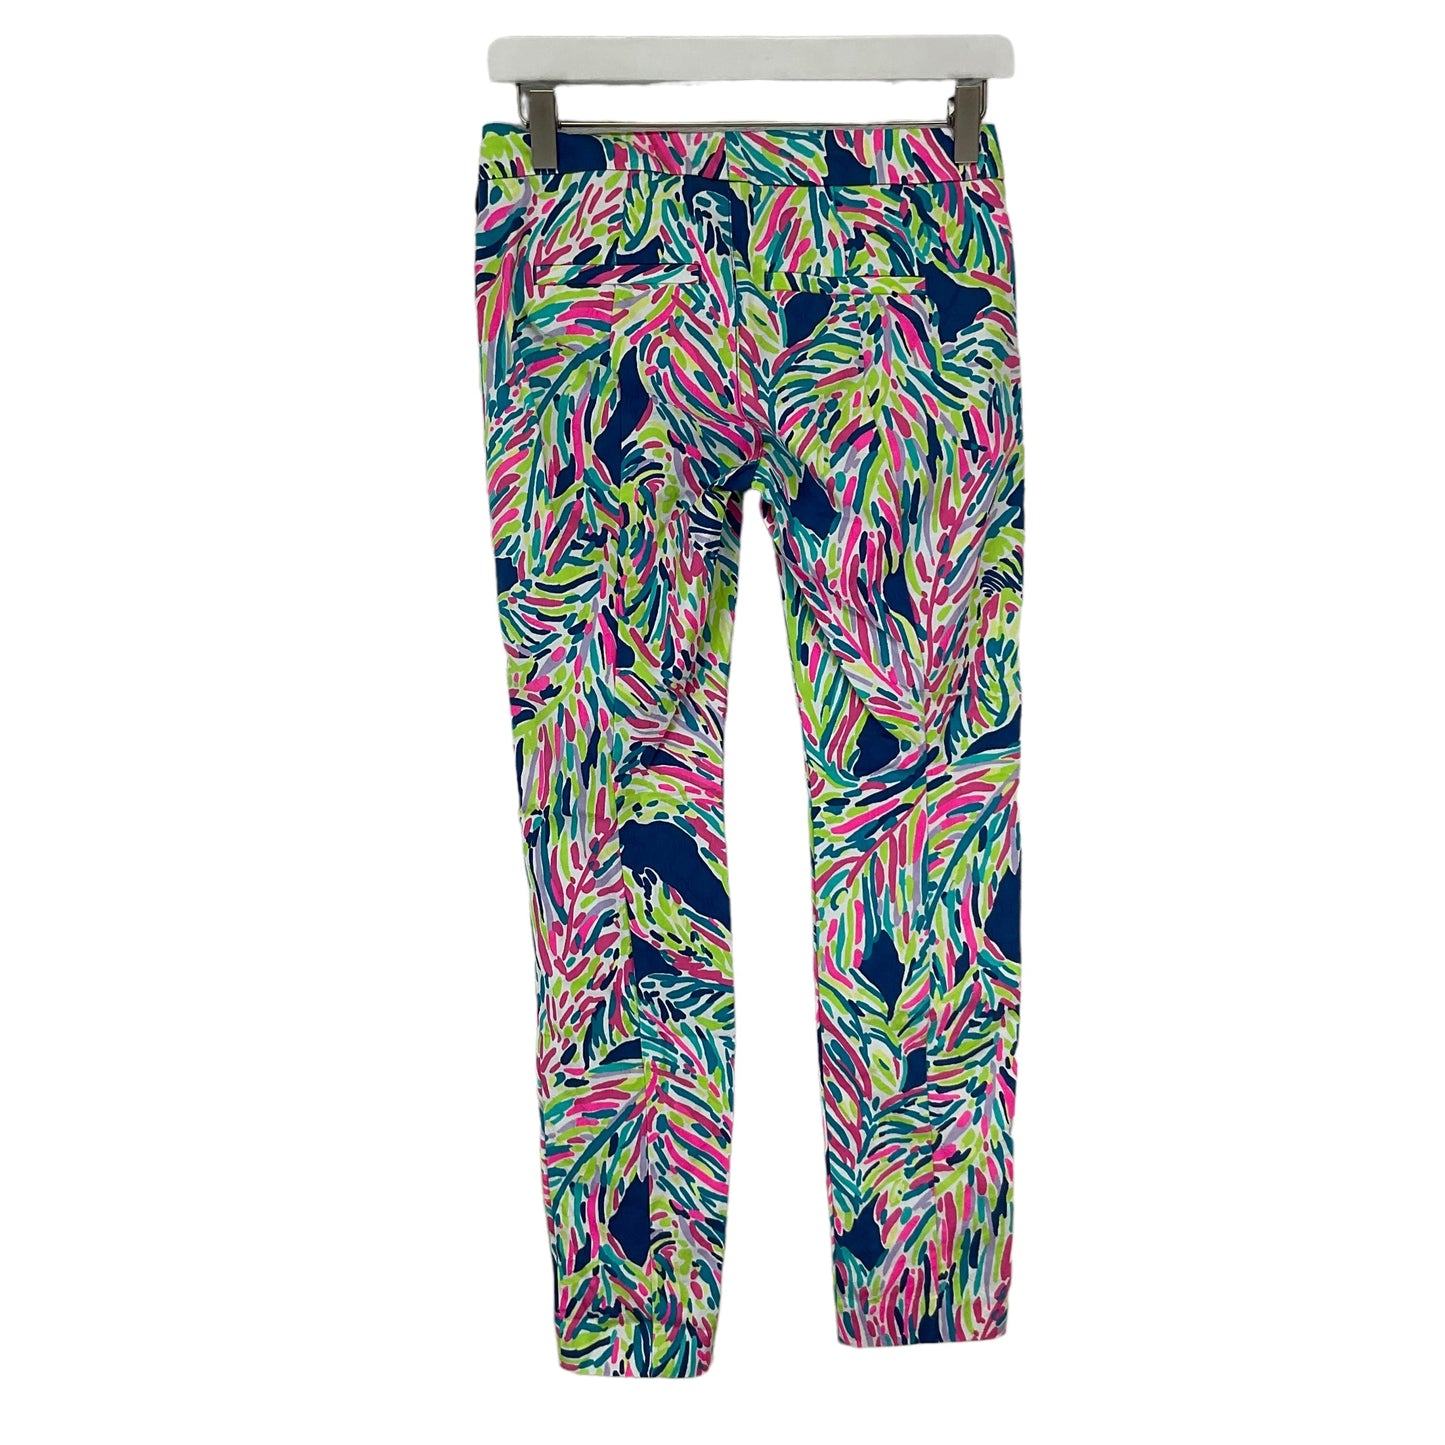 Blue & Pink Pants Designer Lilly Pulitzer, Size 00